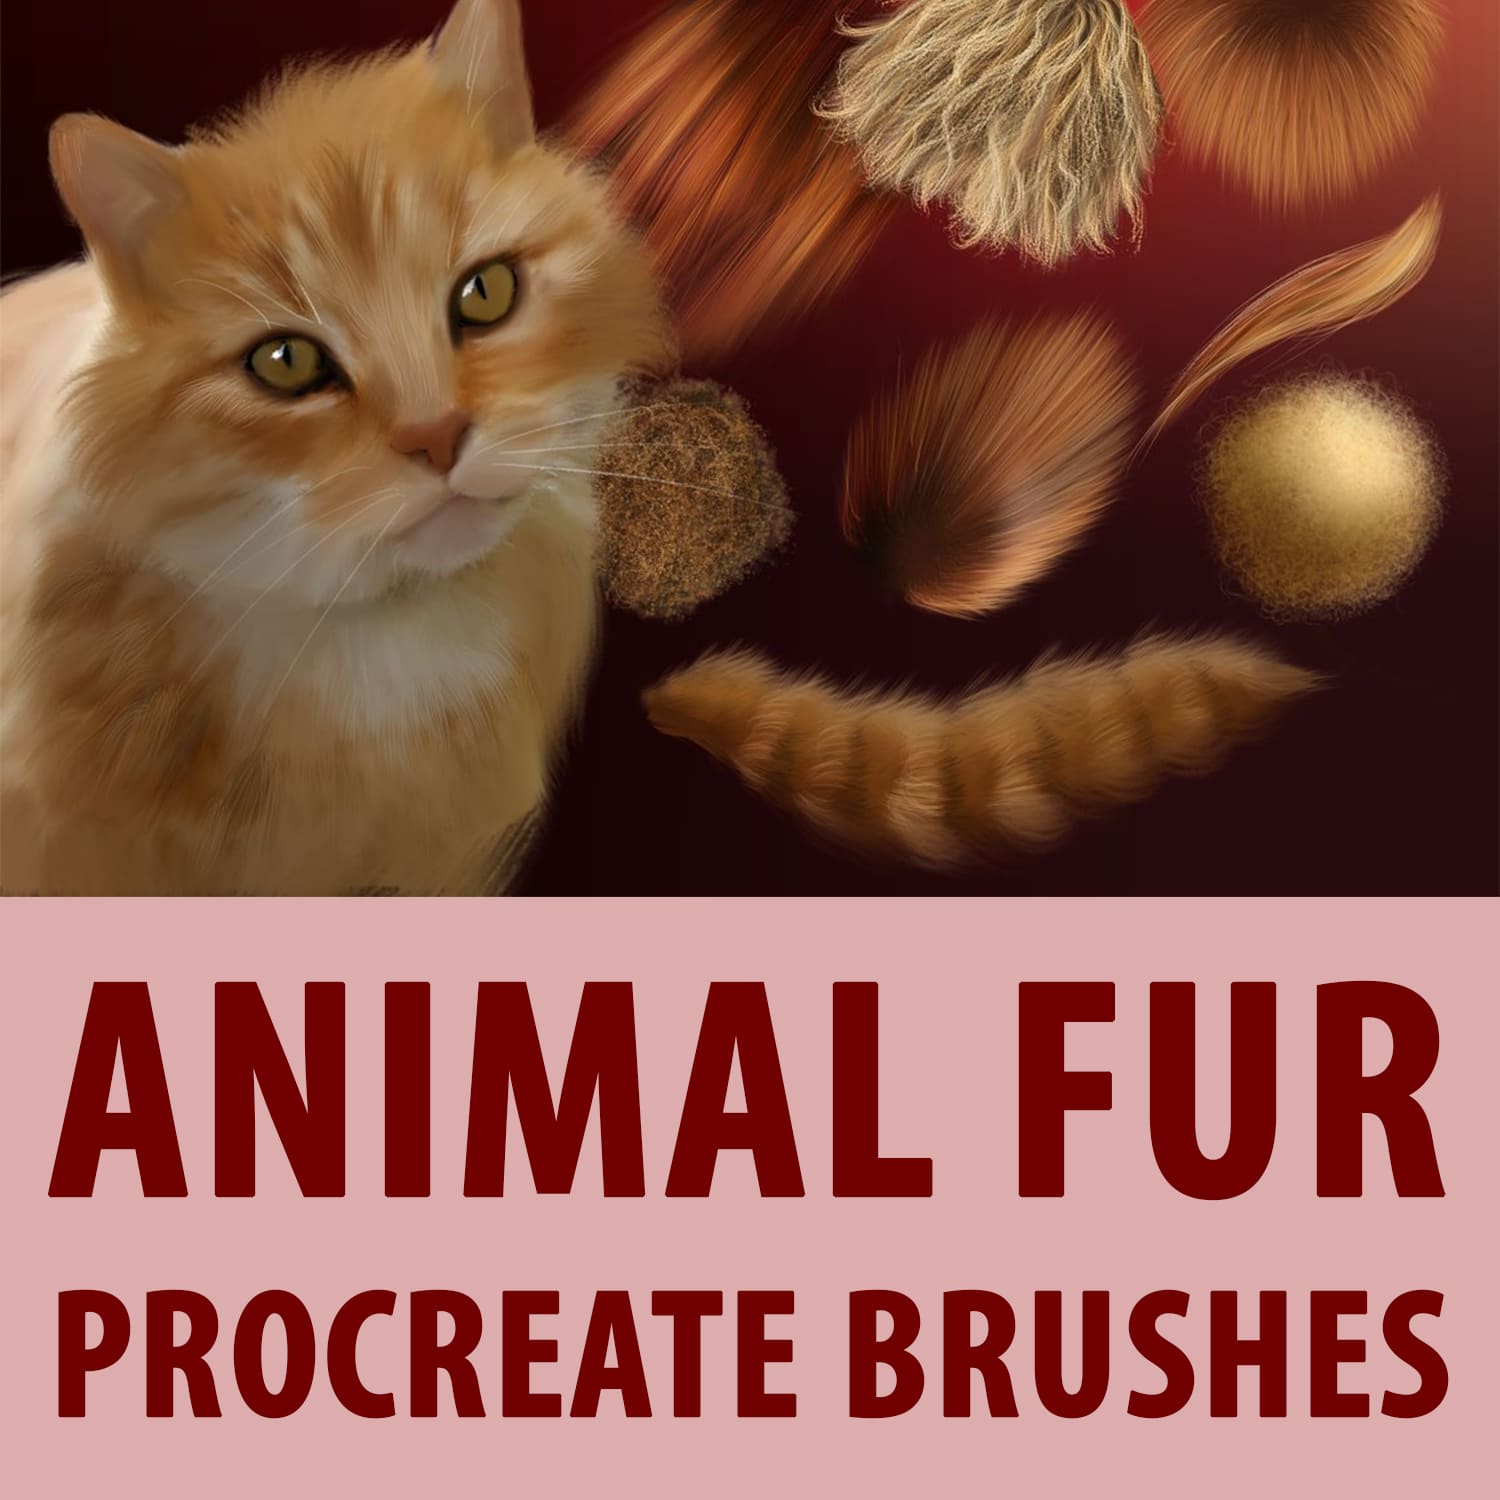 Animal Fur Procreate Brushes main cover.